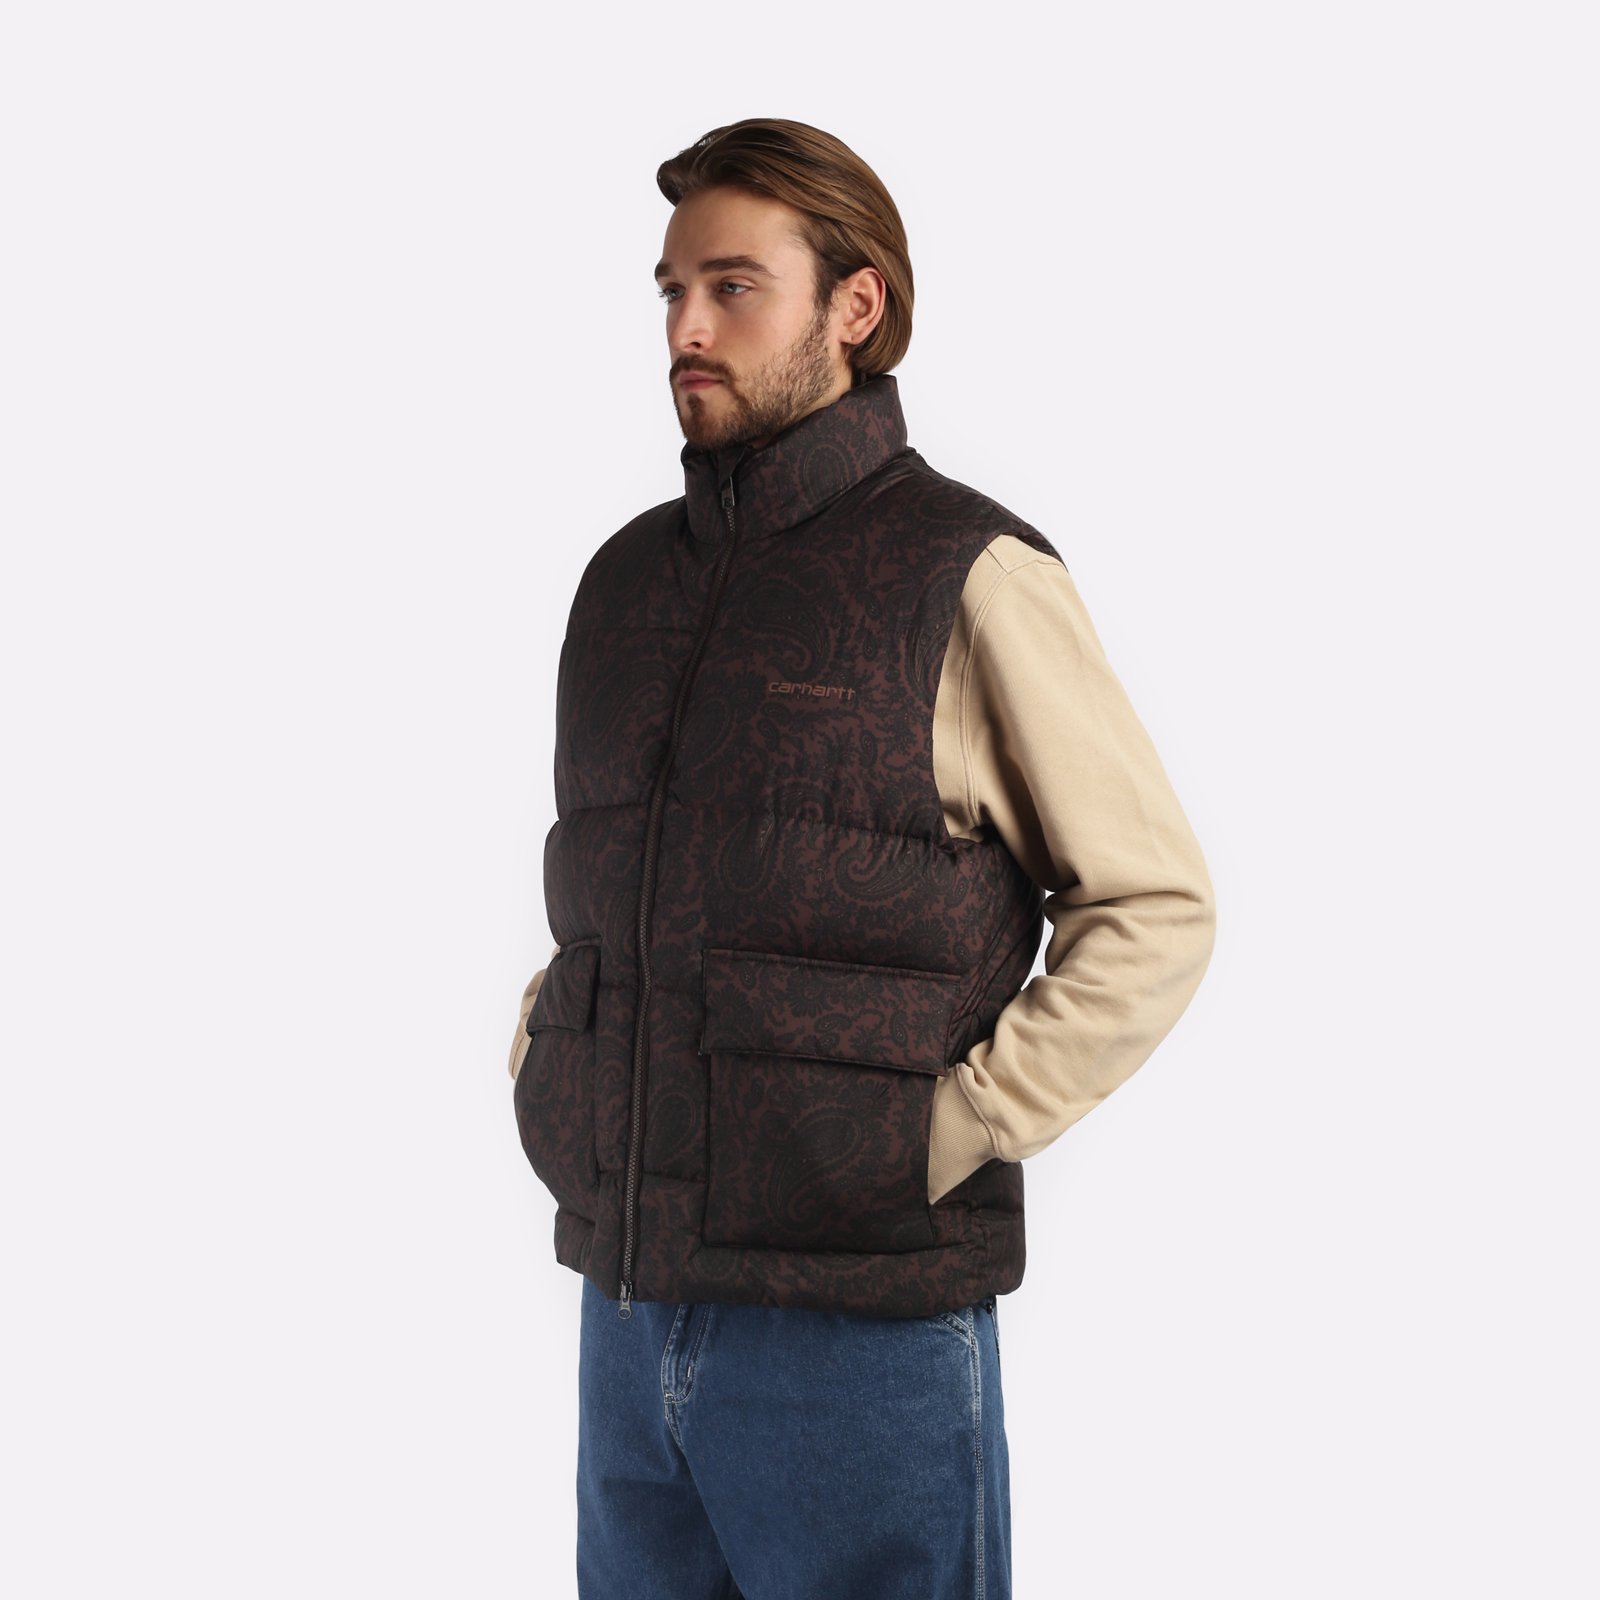 мужской жилет Carhartt WIP Springfield Vest  (I032265-buckeye/black)  - цена, описание, фото 3